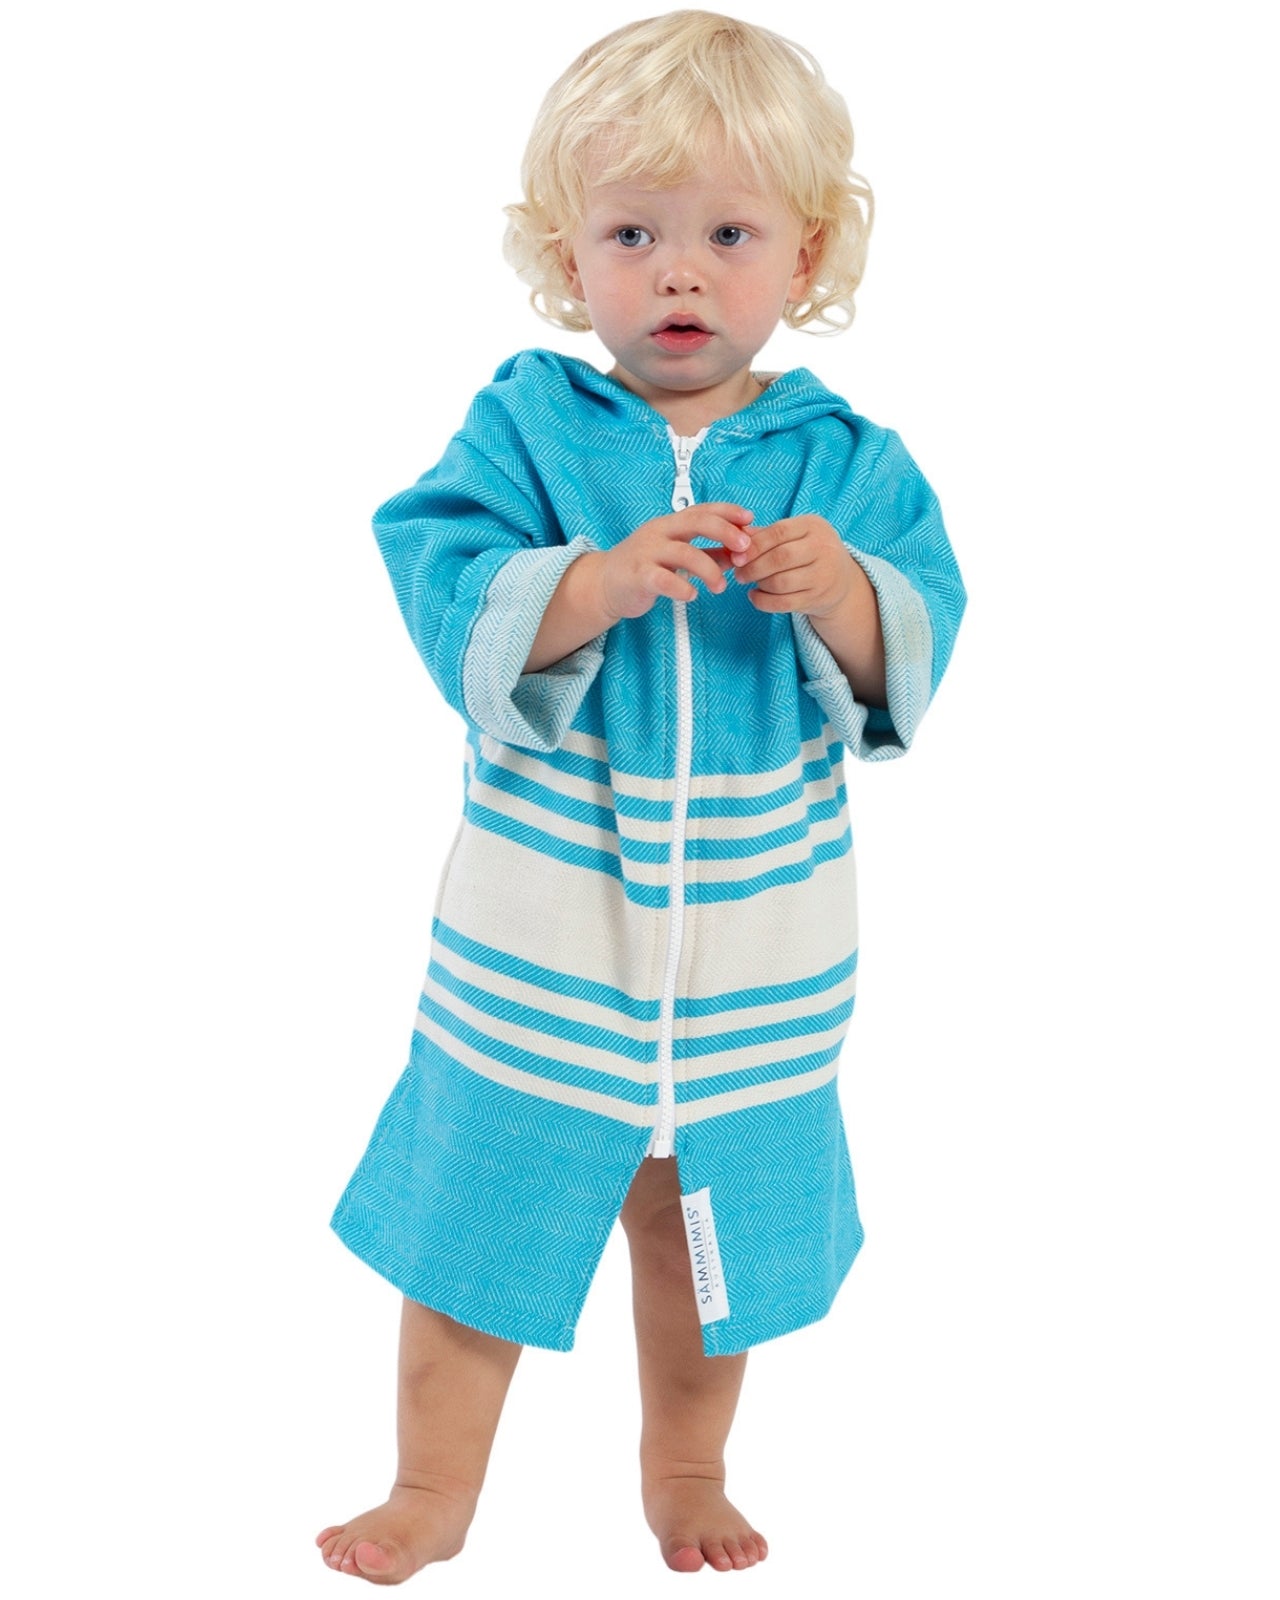 TASSOS Baby Hooded Towel: Aqua/White